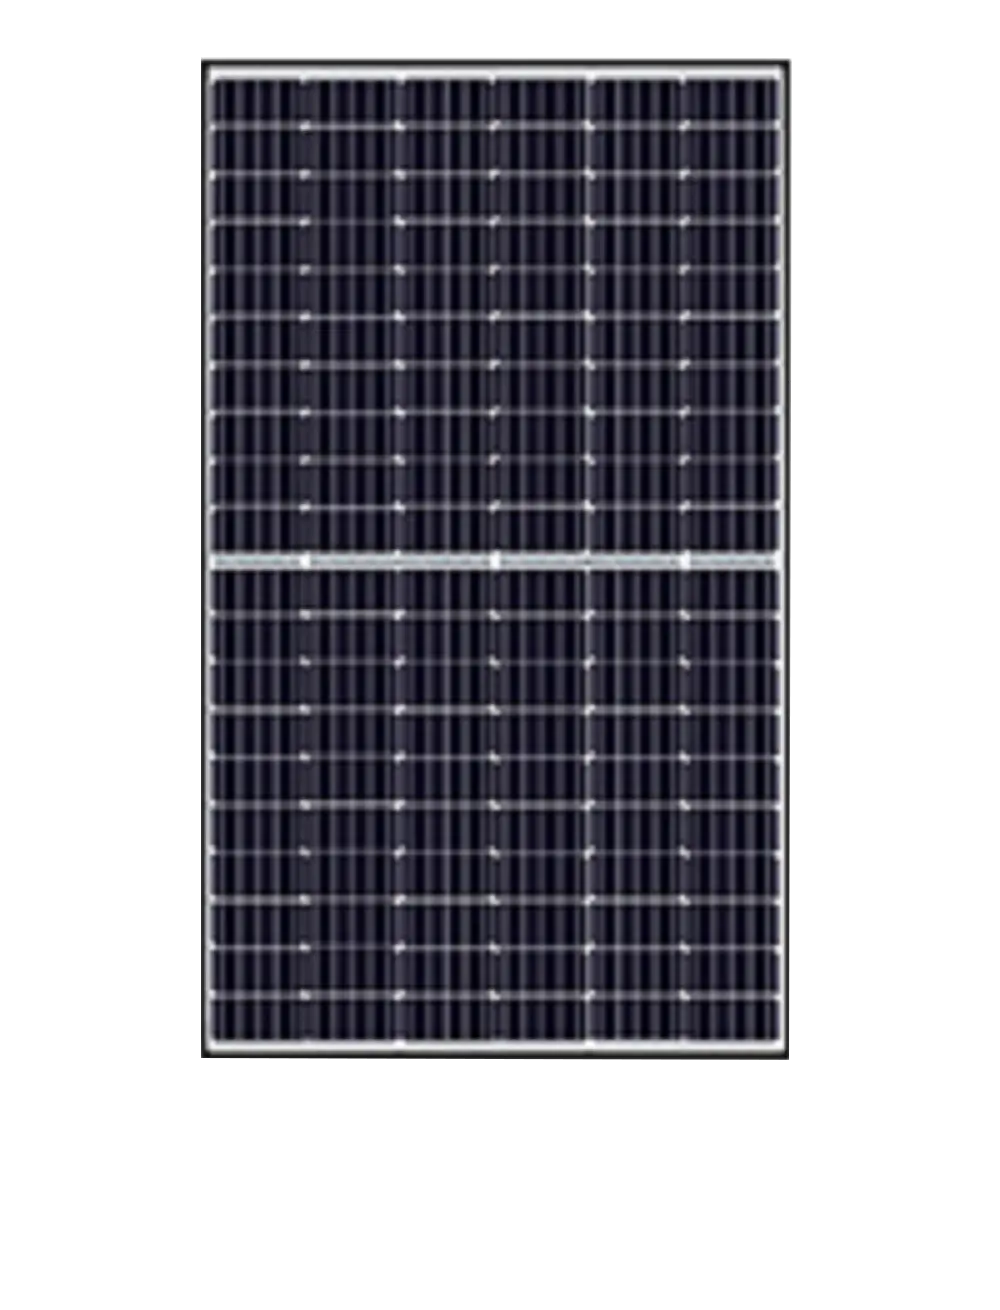 SINO GREEN Solar KuBlack CS3K-295MS 295W Mono PERC Solar Panel
